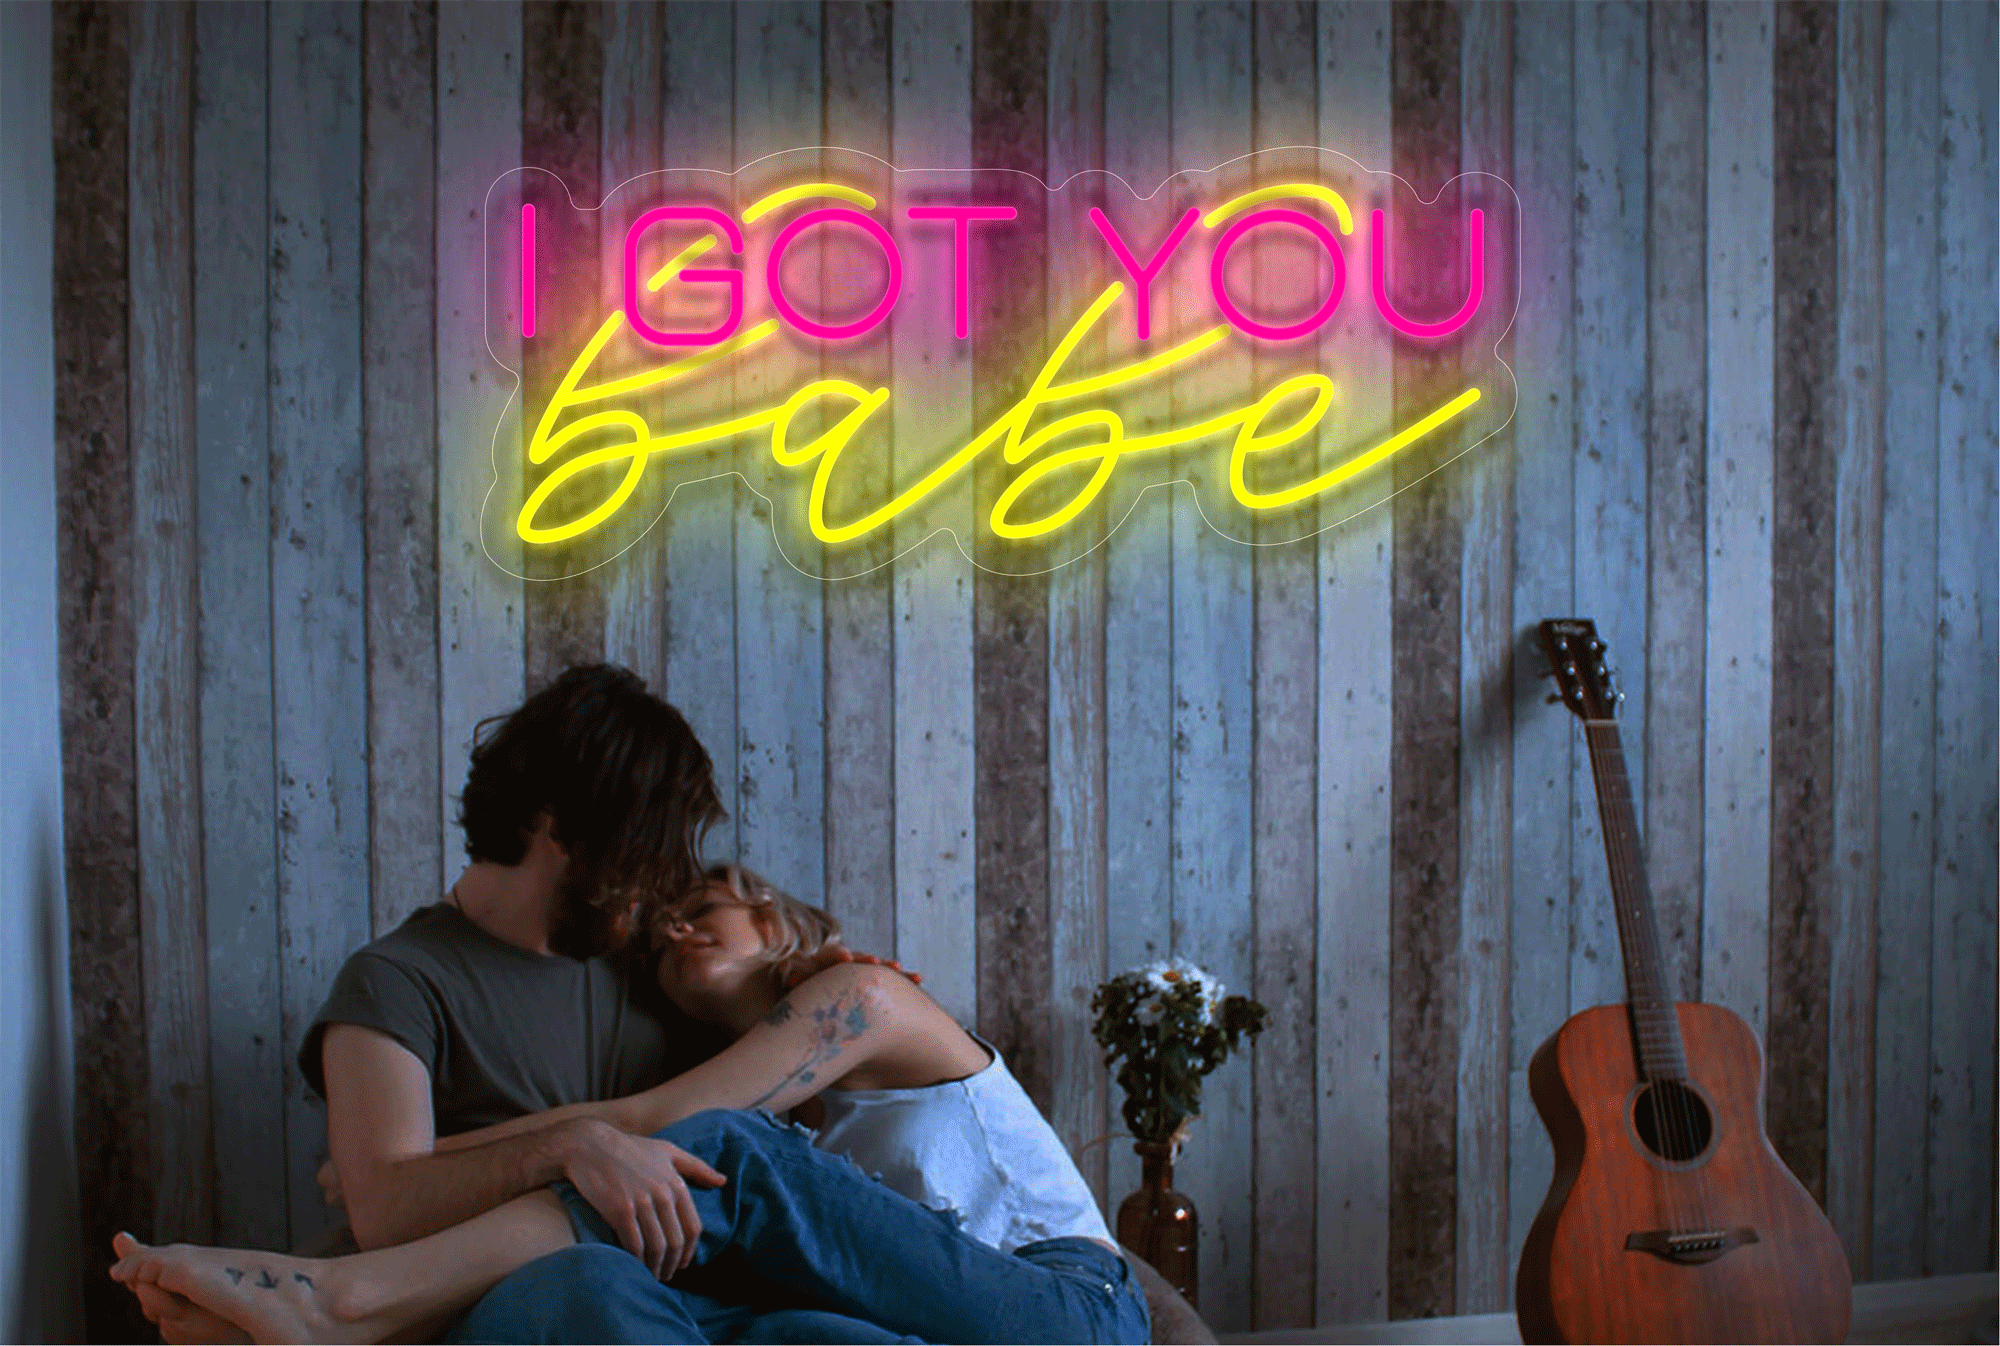 "I Got You Babe" LED Neon Sign